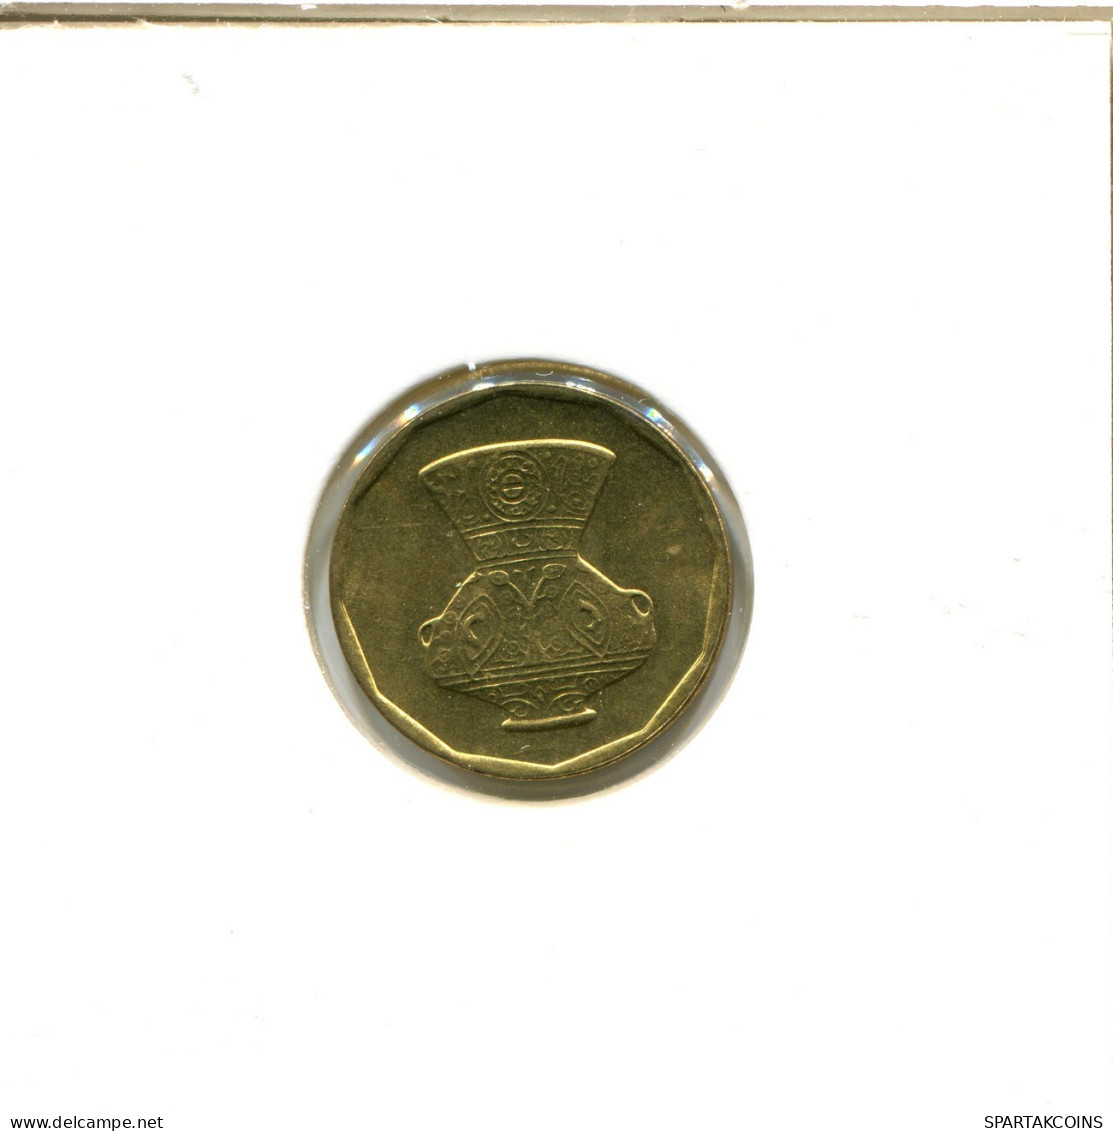 5 QIRSH 2004 EGIPTO EGYPT Islámico Moneda #AX553.E.A - Egypt